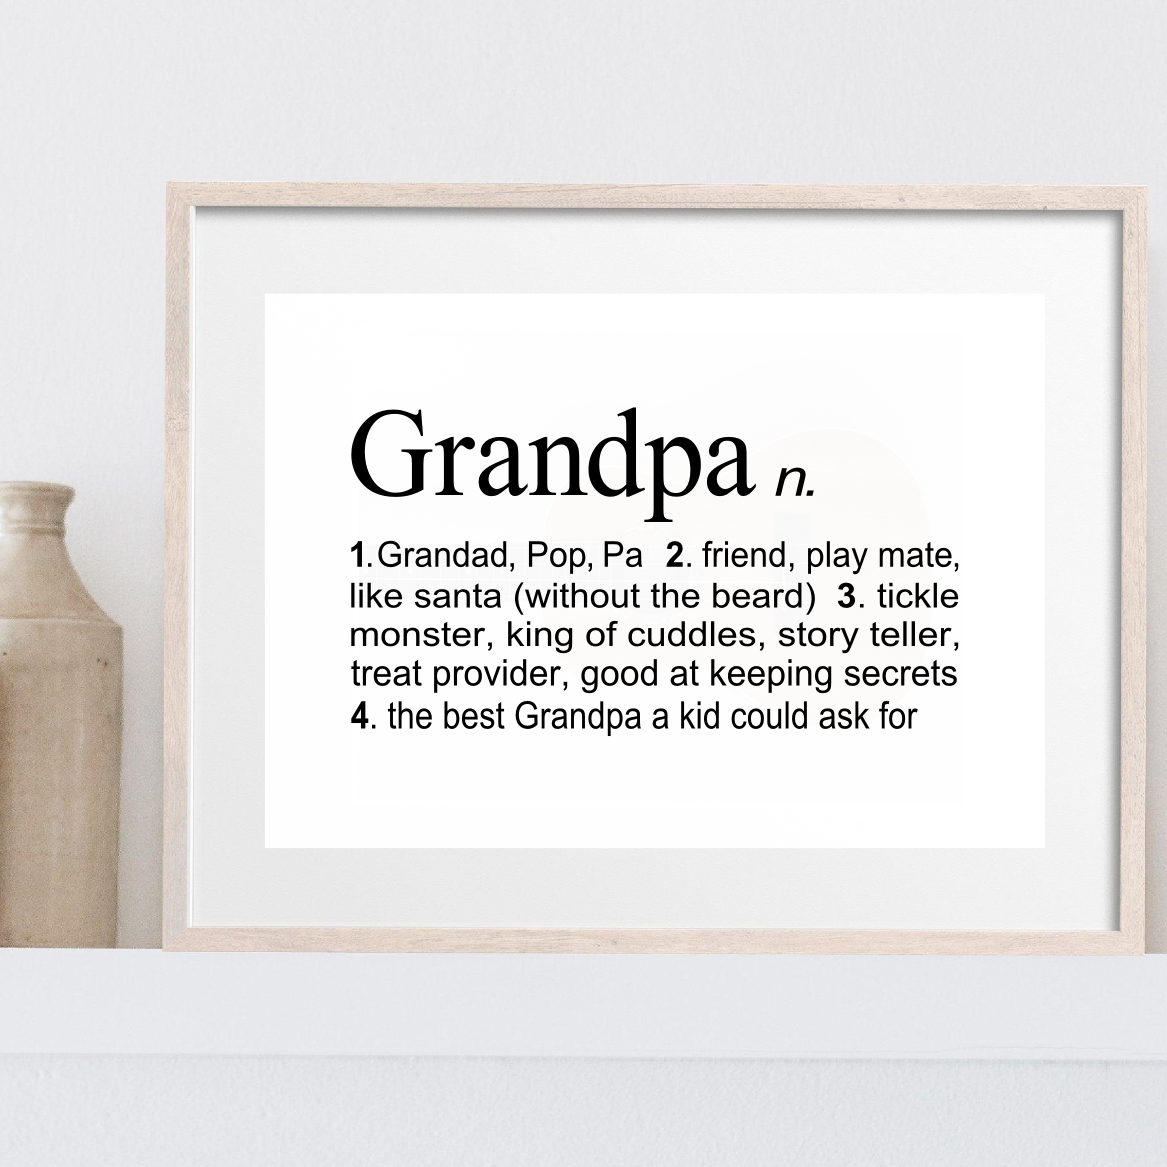 Grandpa Dictionary Definition